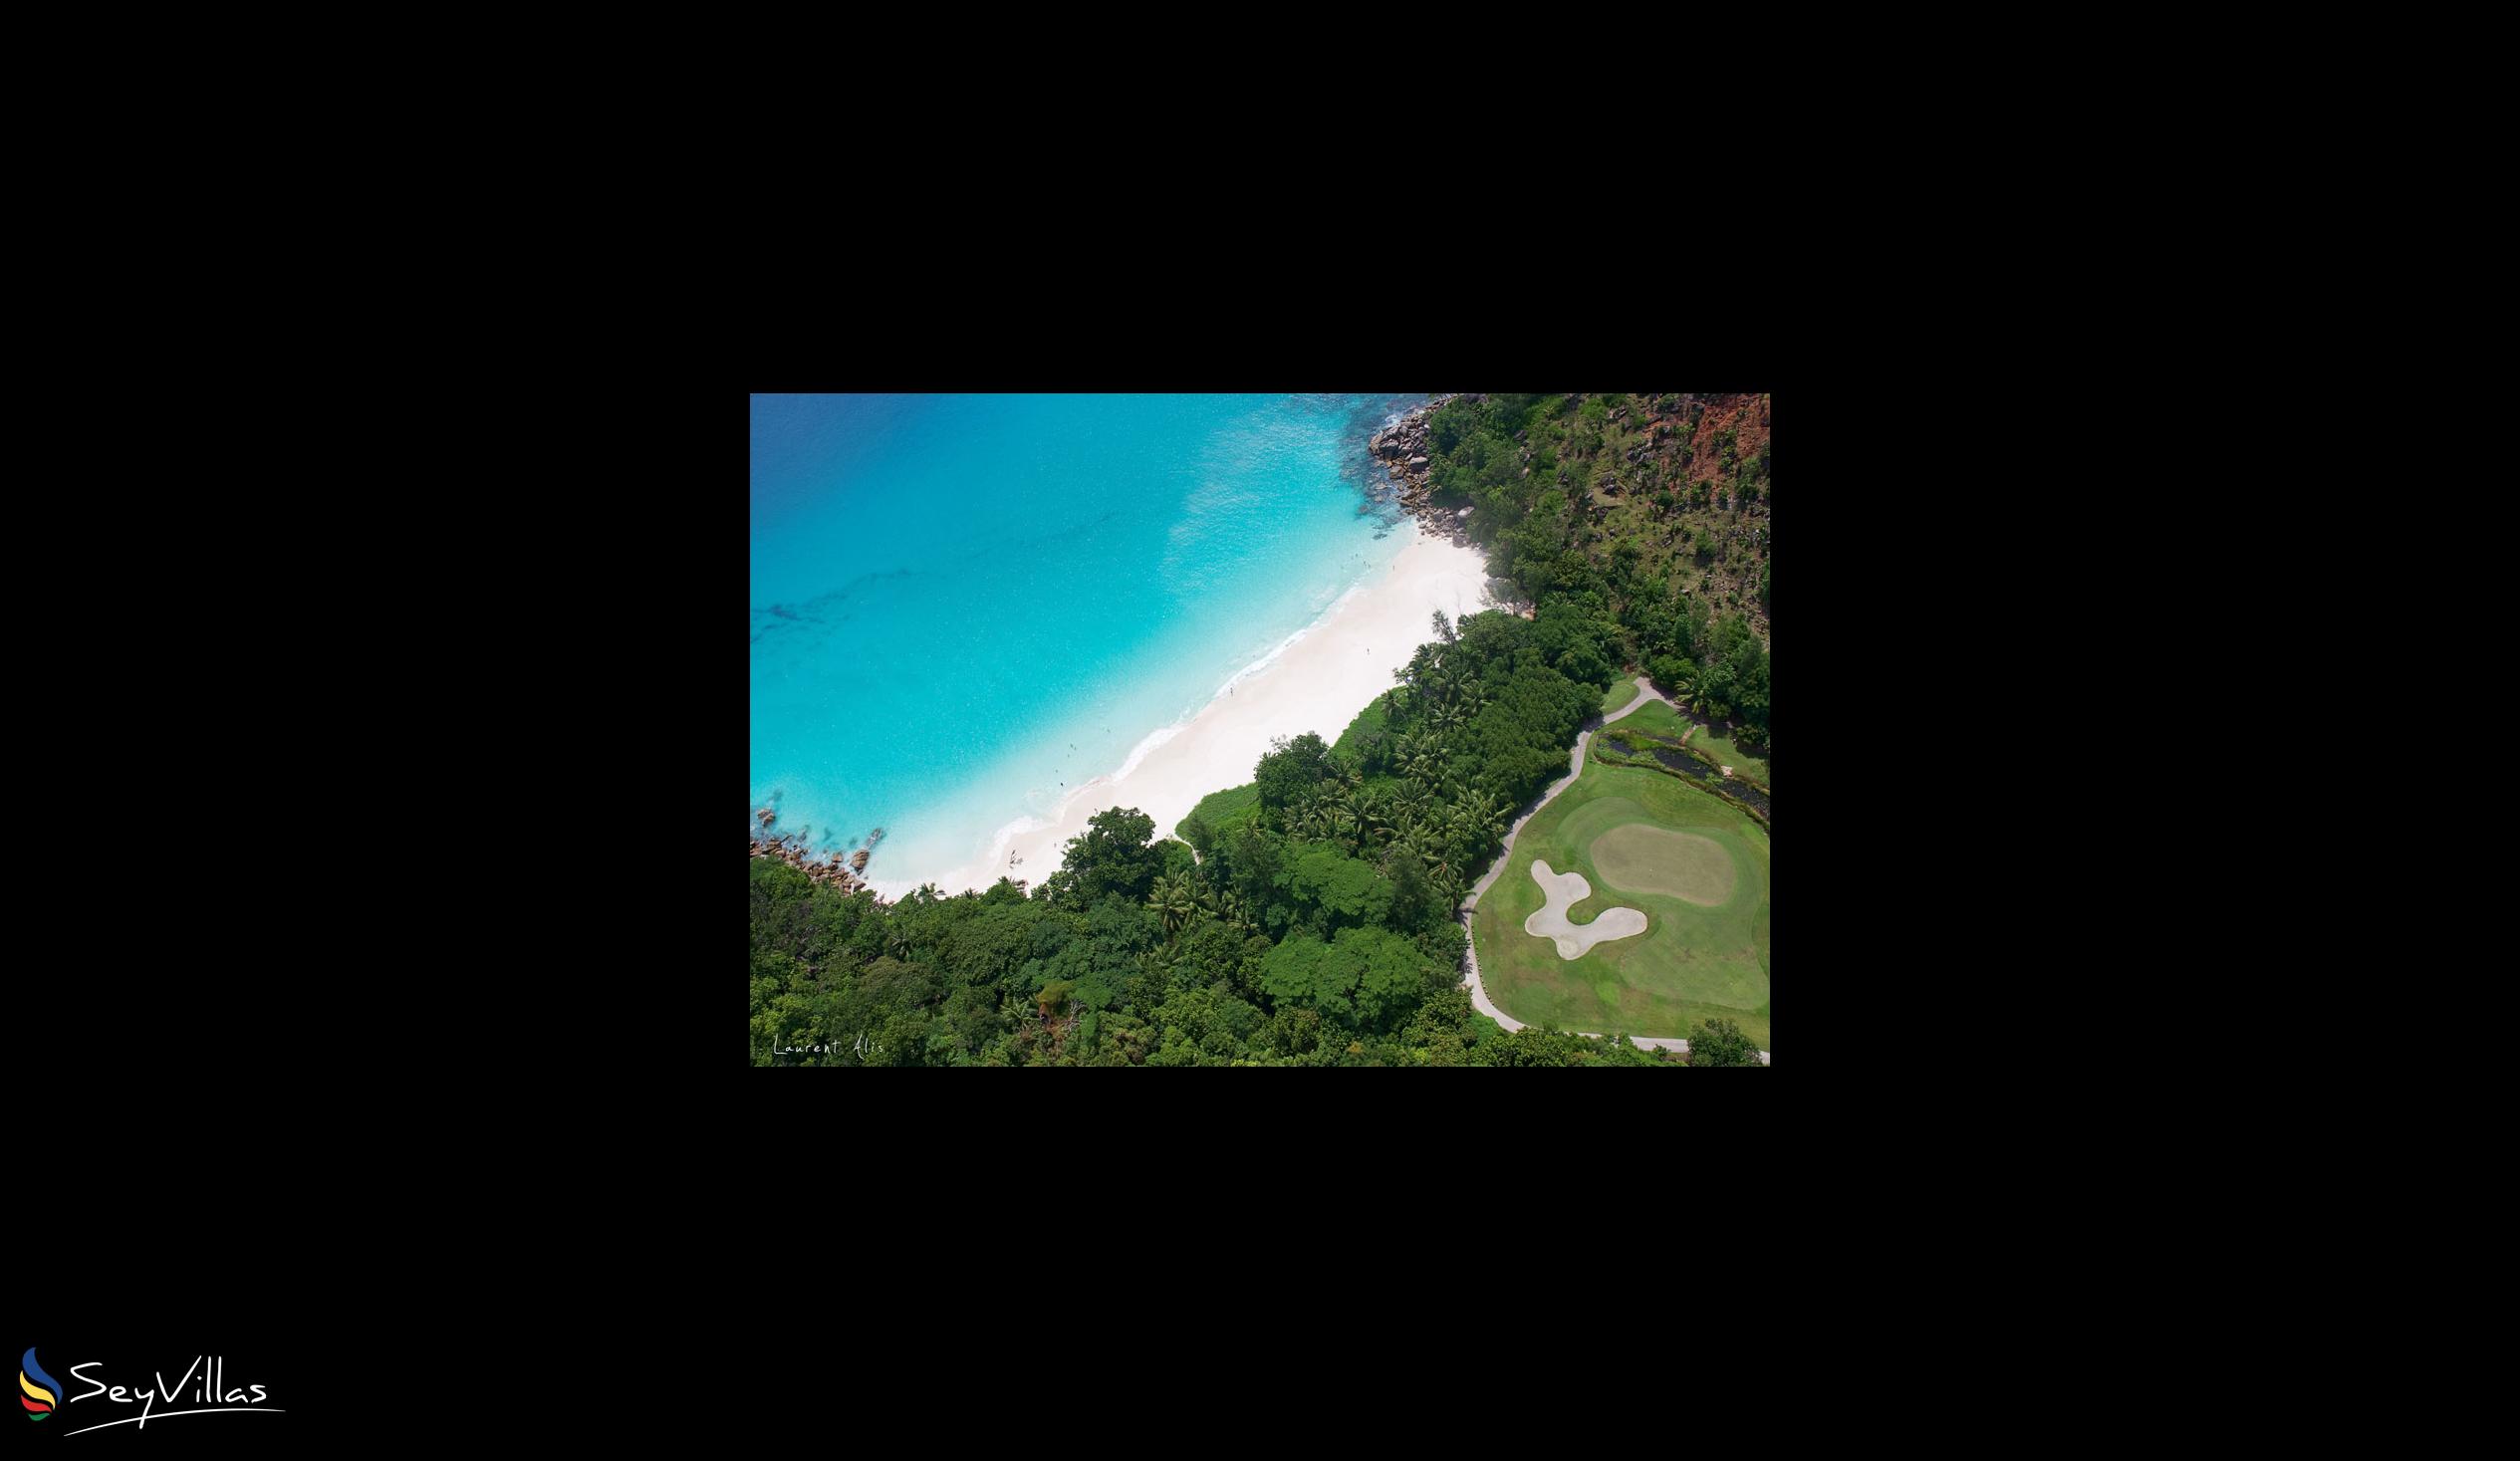 Foto 34: Silhouette Sea Pearl - Plages - Seychelles (Seychelles)